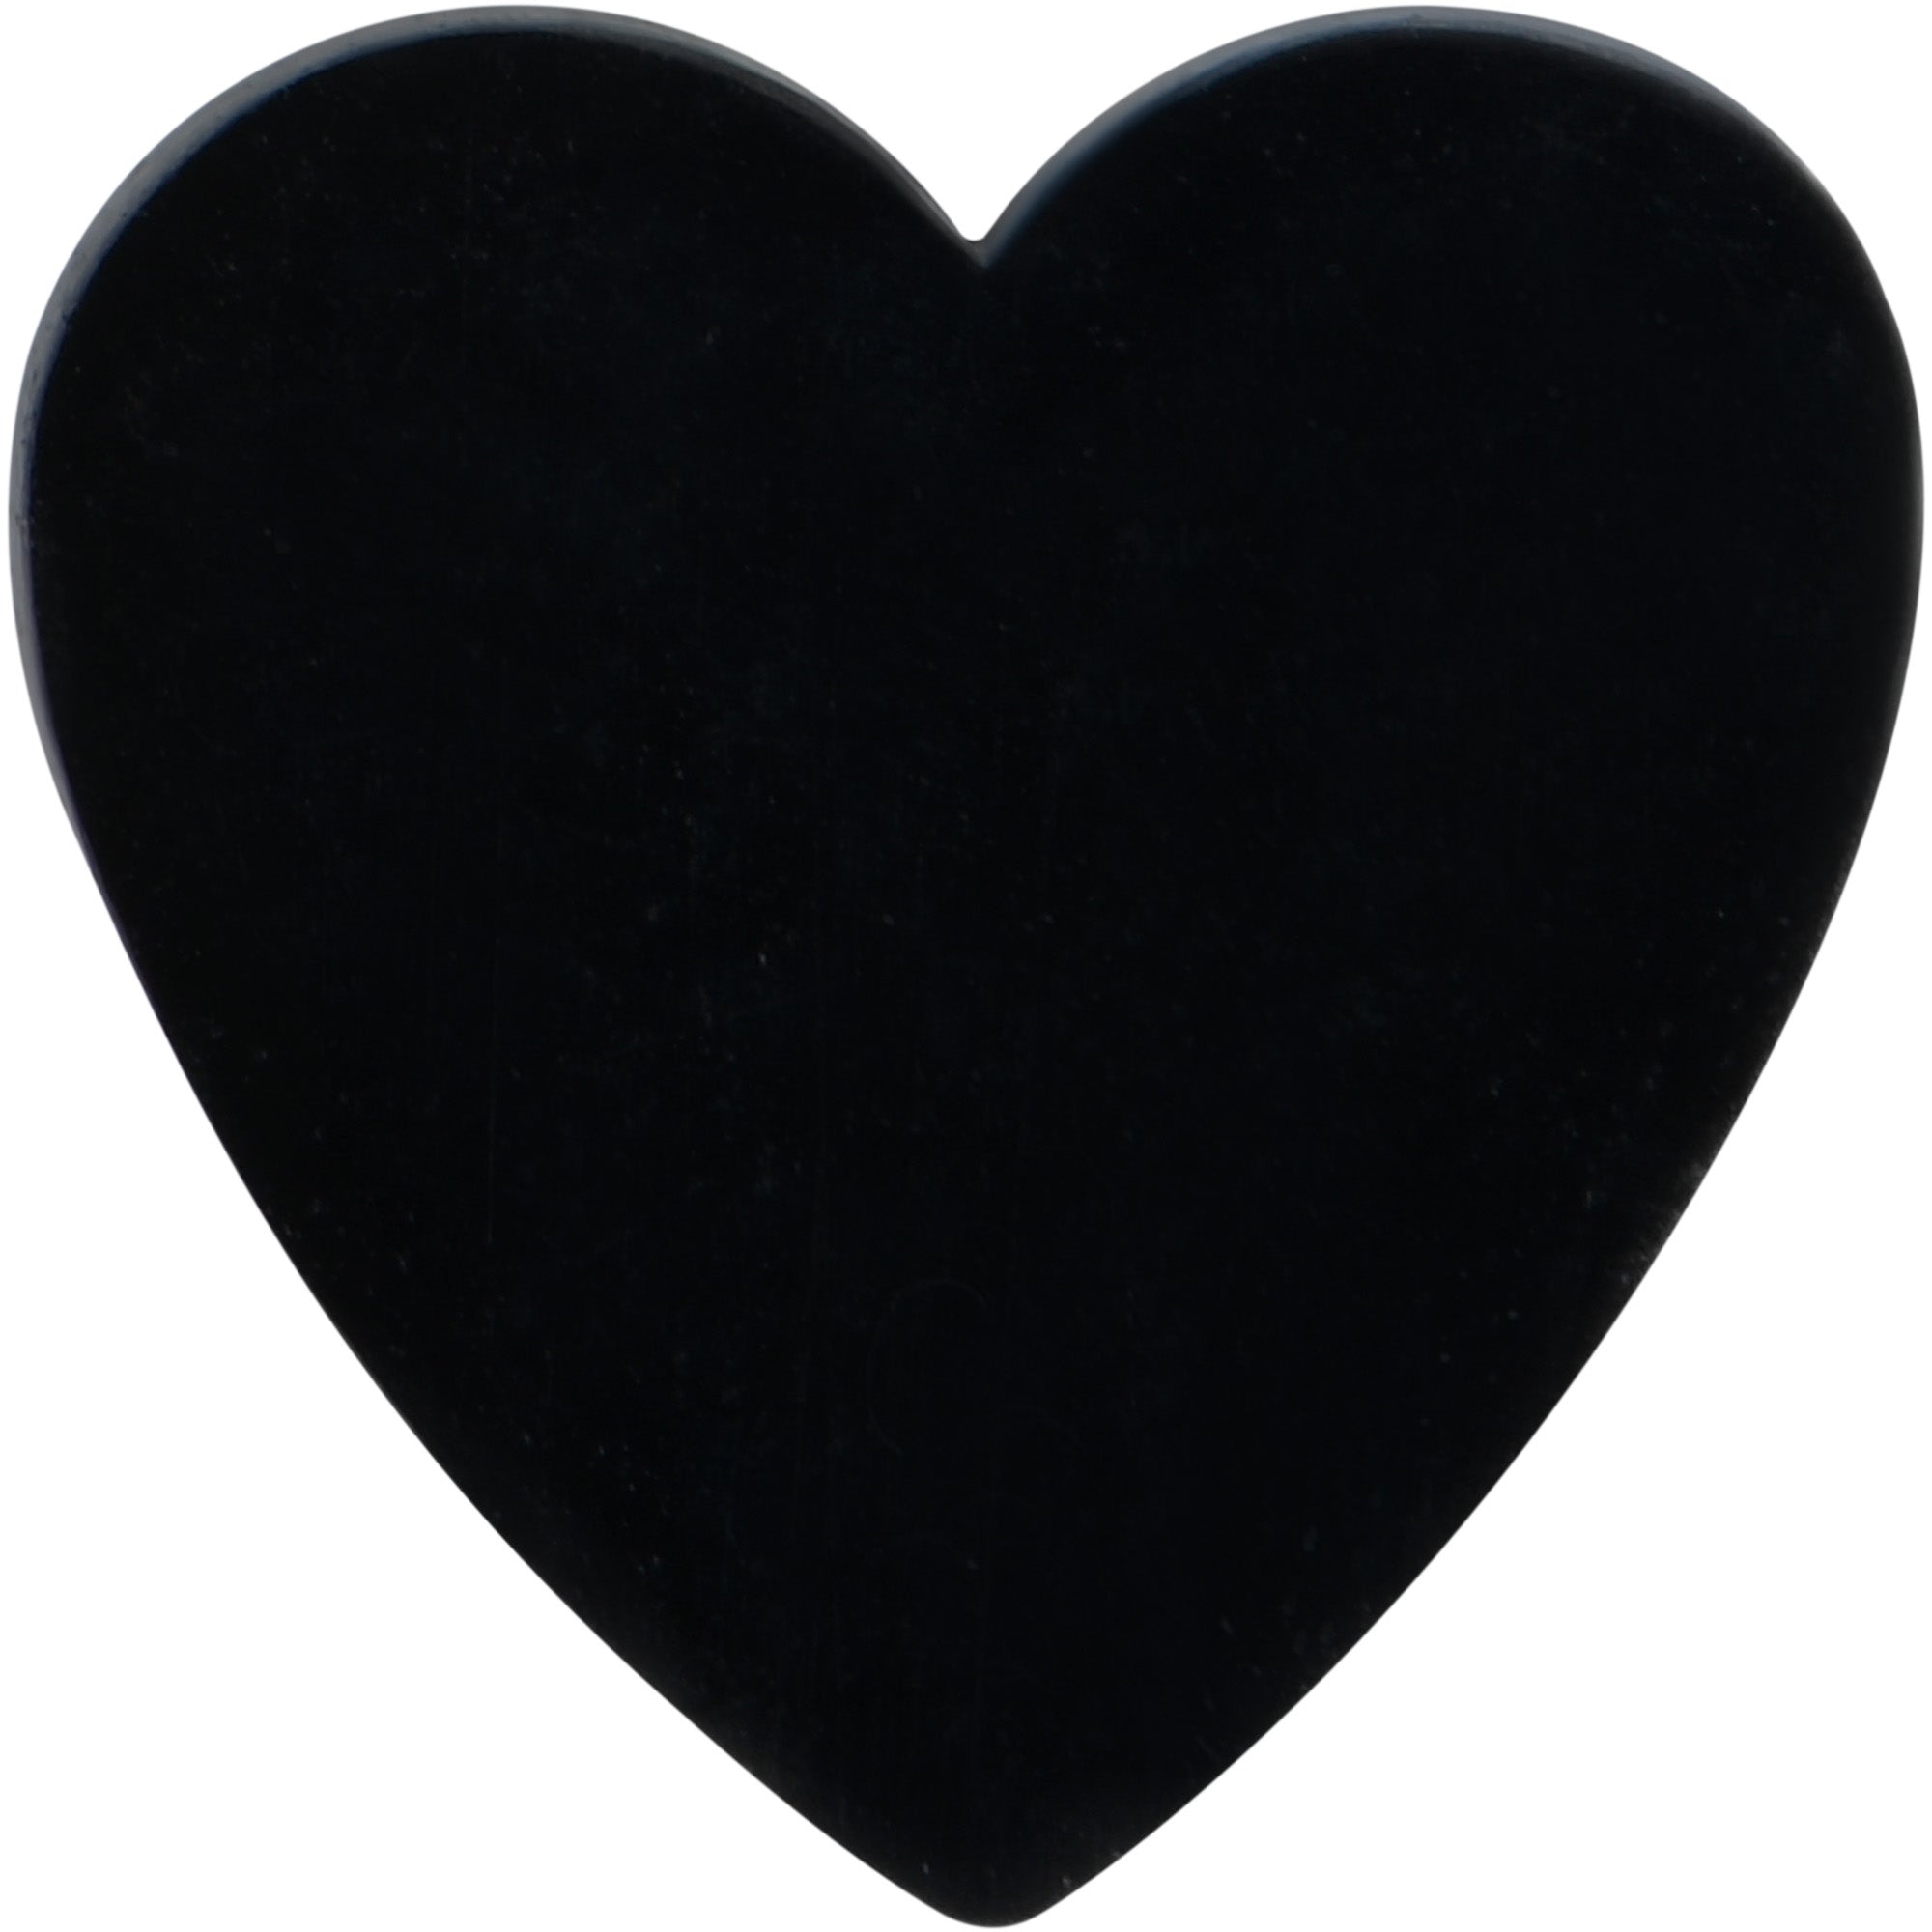 16 Gauge 5/16 Black Simple Heart Internally Threaded Labret Tragus